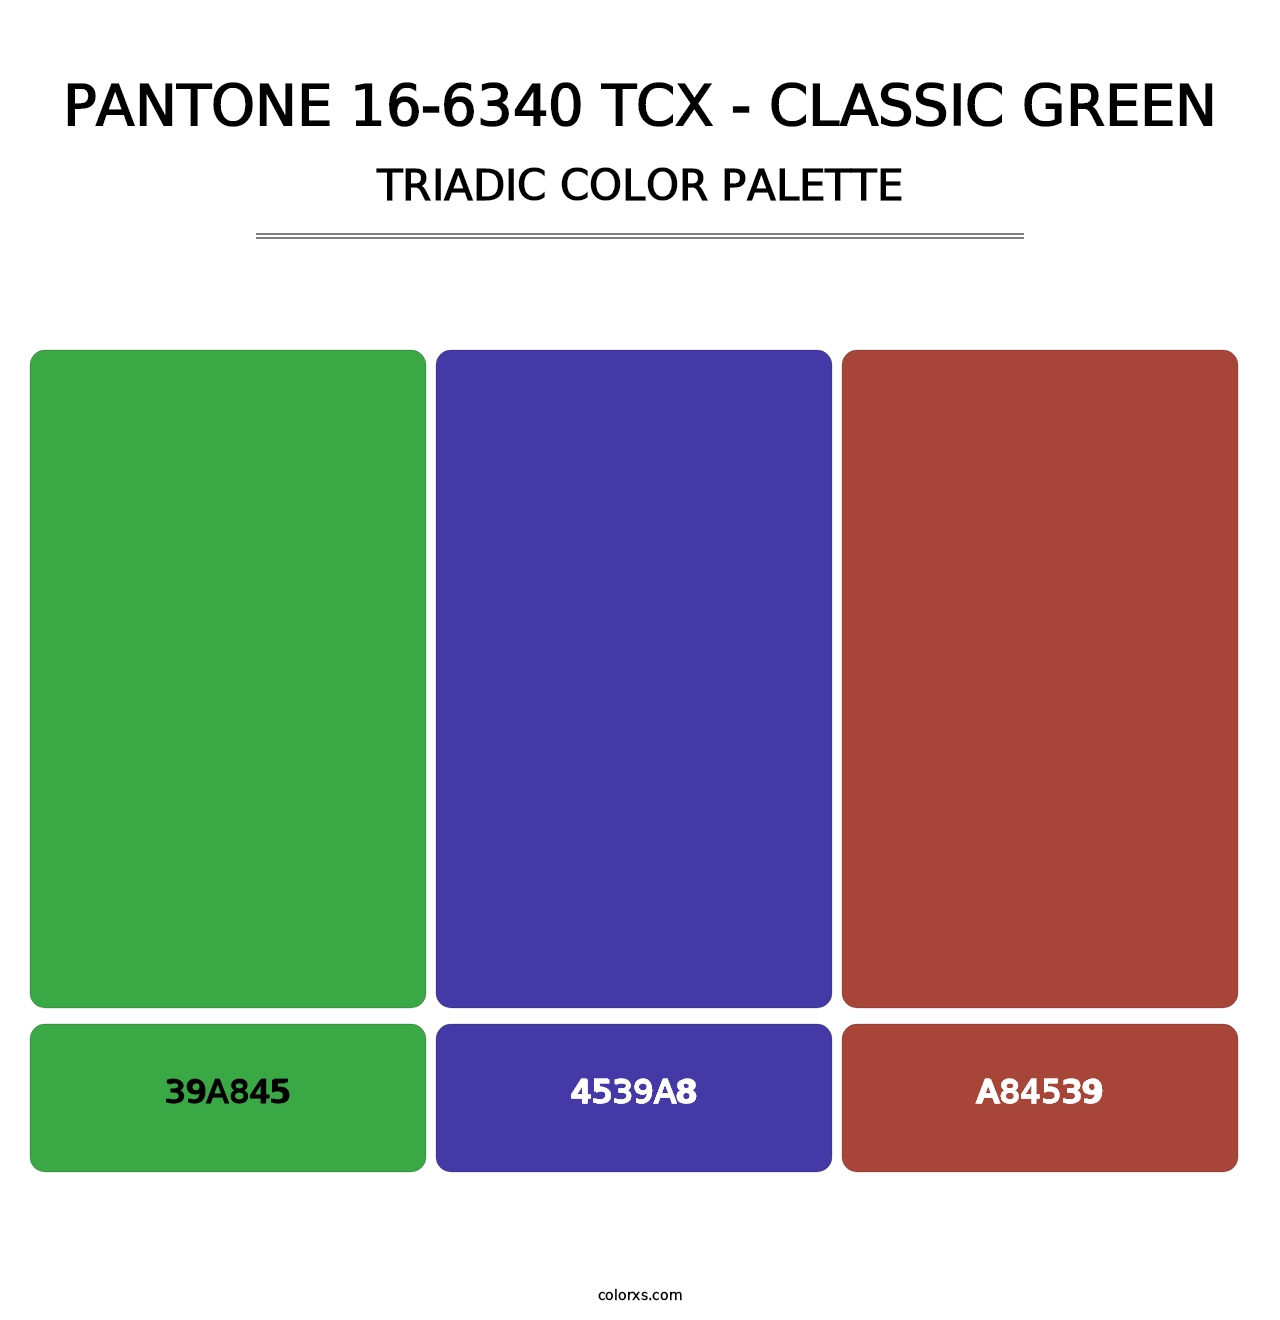 PANTONE 16-6340 TCX - Classic Green - Triadic Color Palette